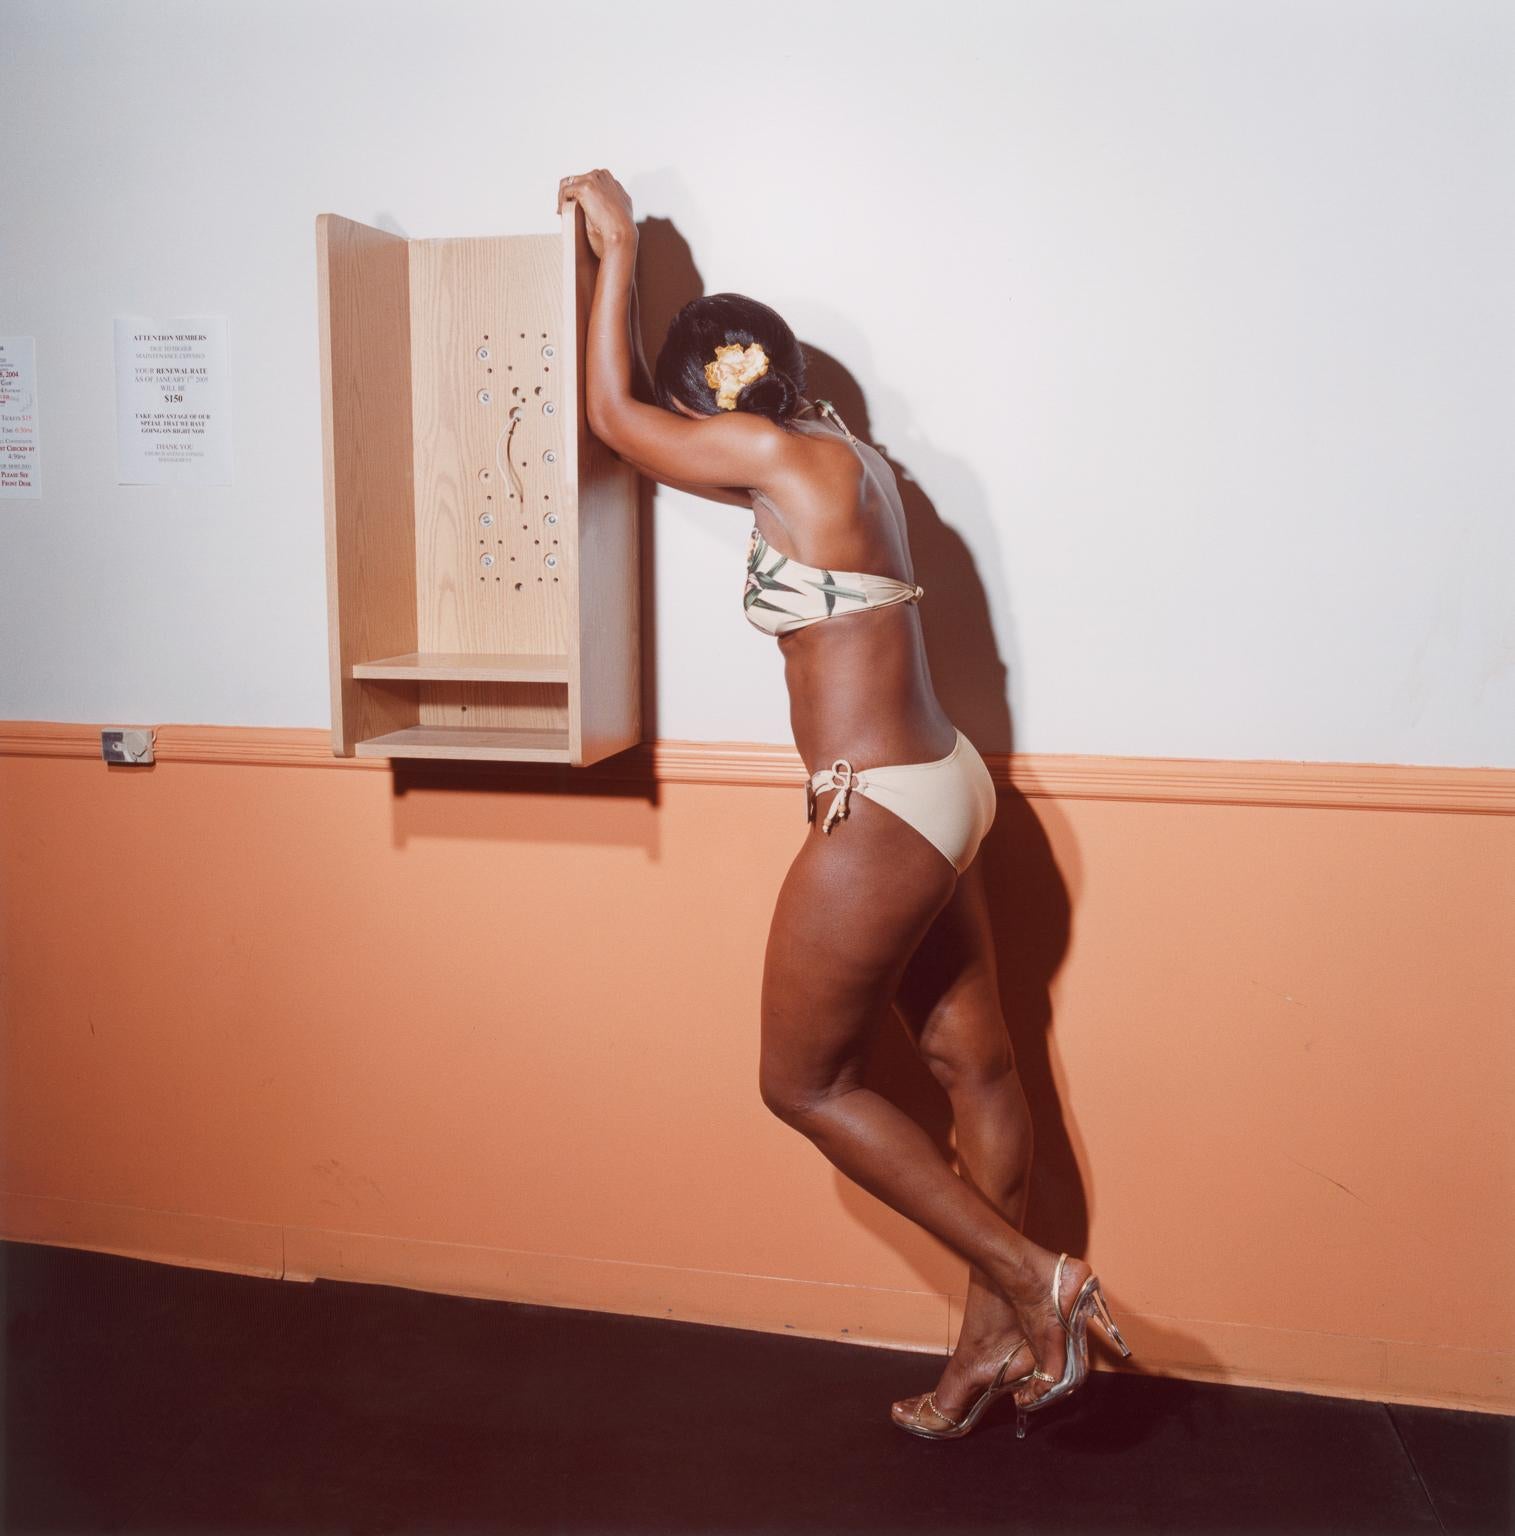 Brian Finke Figurative Photograph - Untitled (Bodybuilding no. 42)